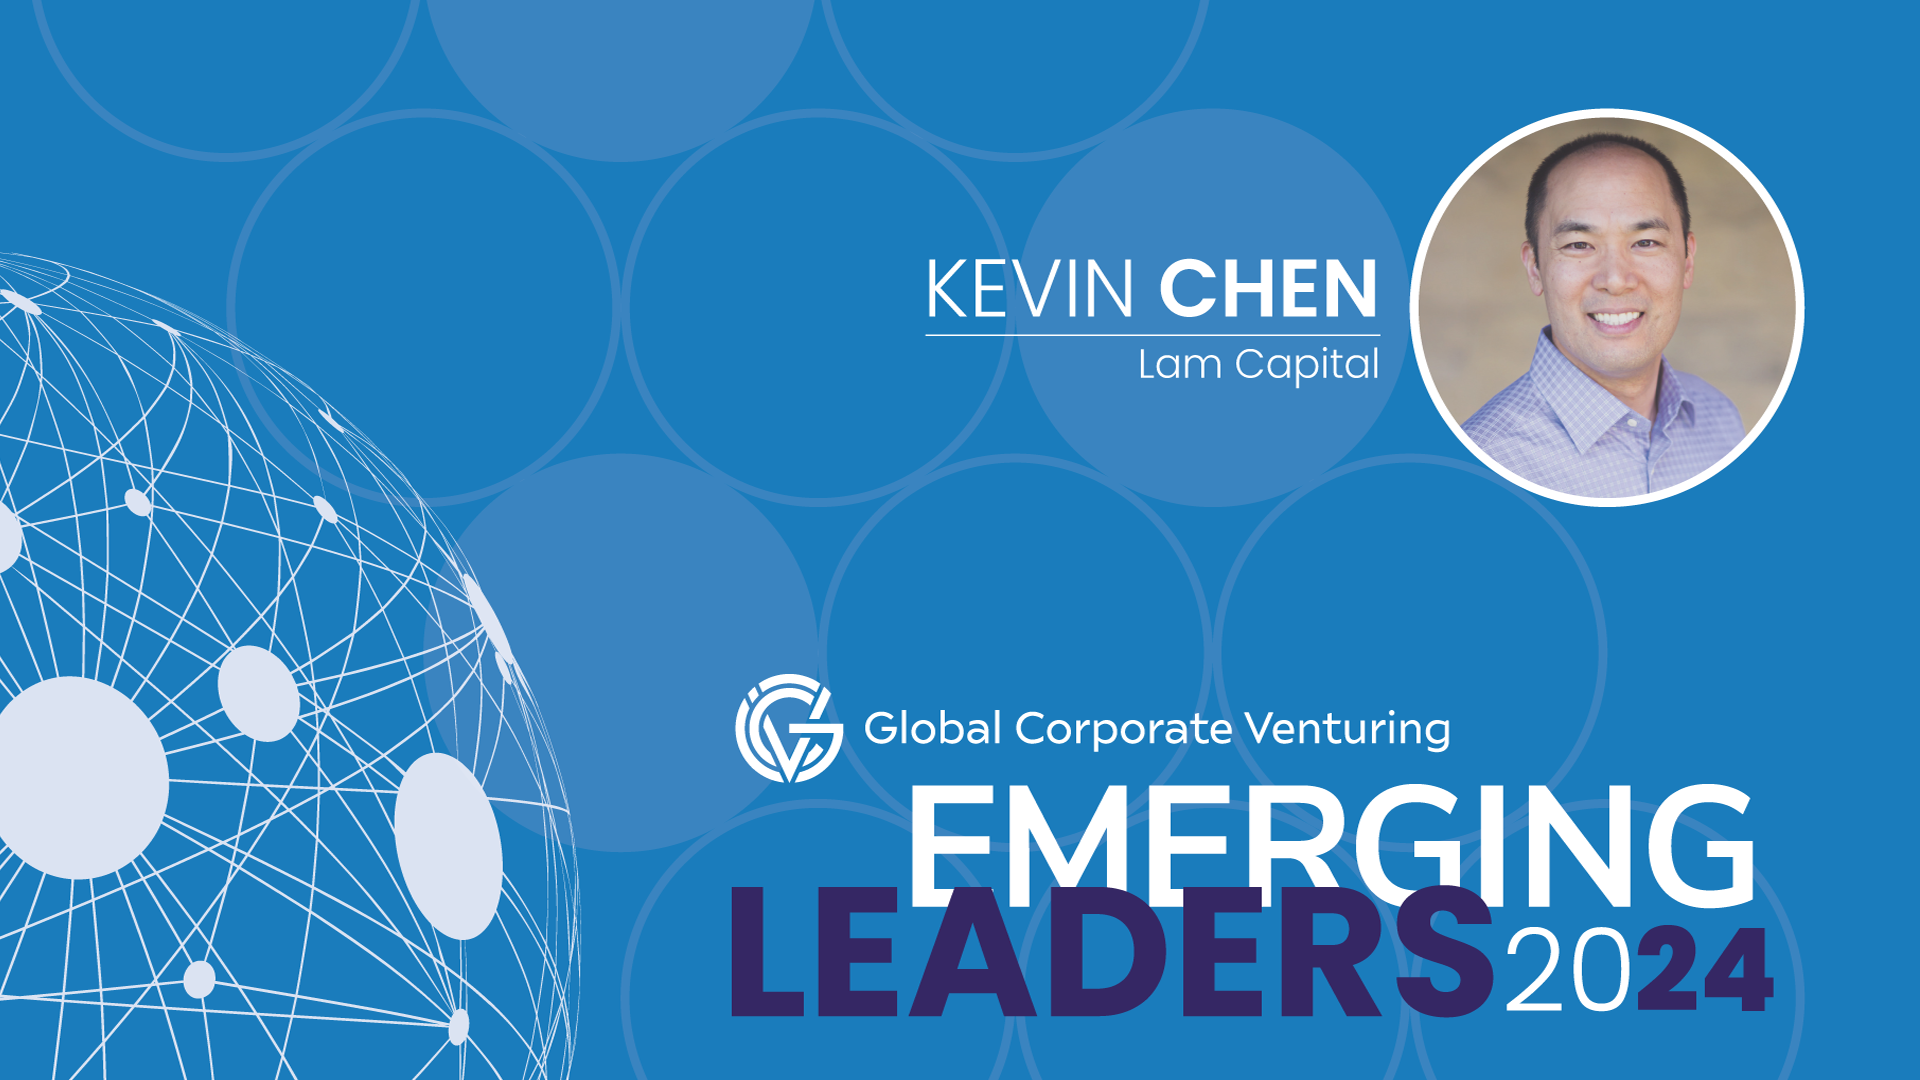 Kevin Chen, Lam Capital